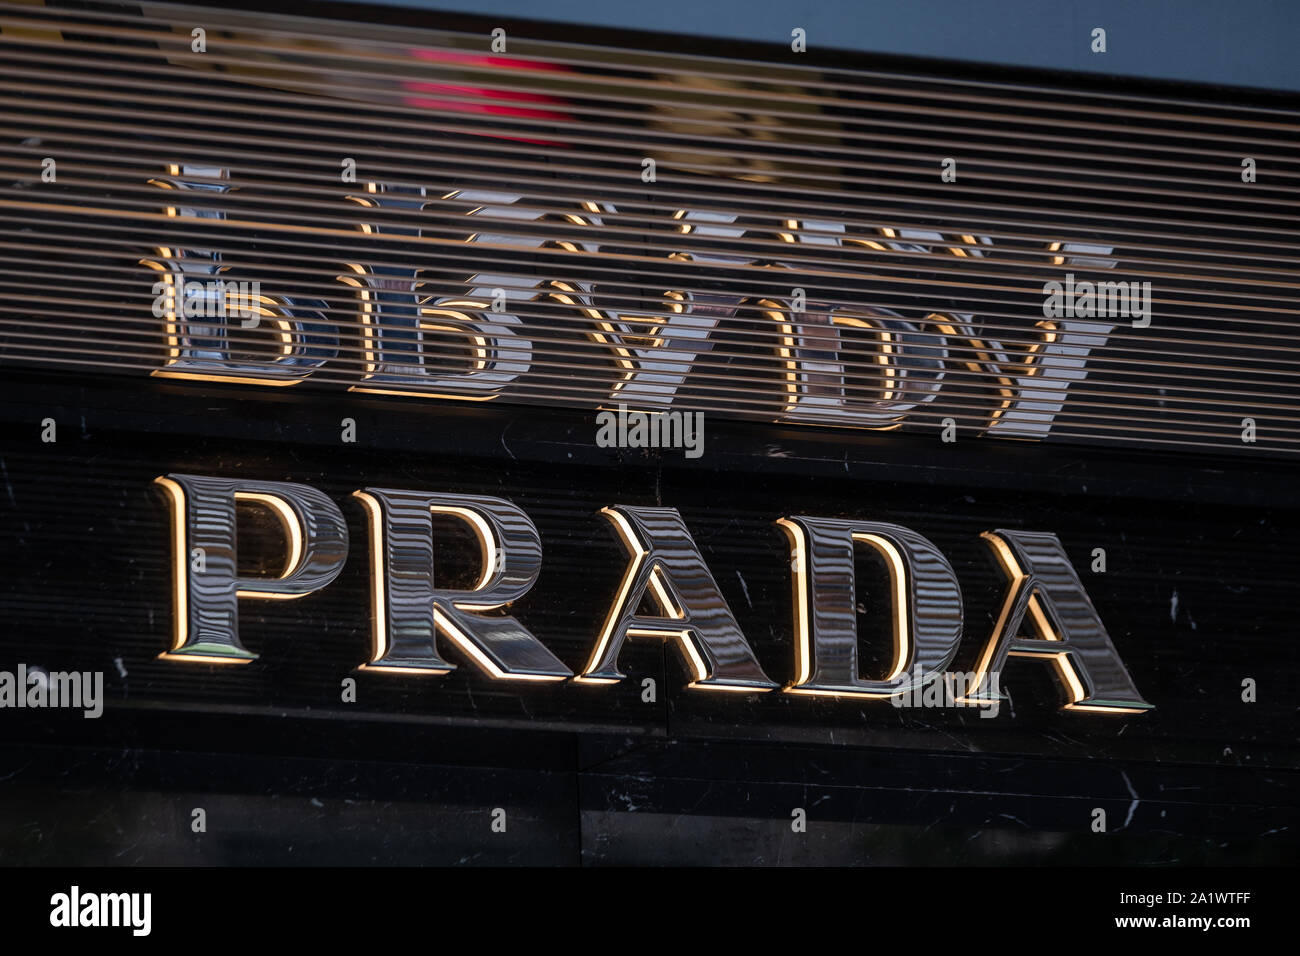 Prada logo at the brand store facade Stock Photo - Alamy